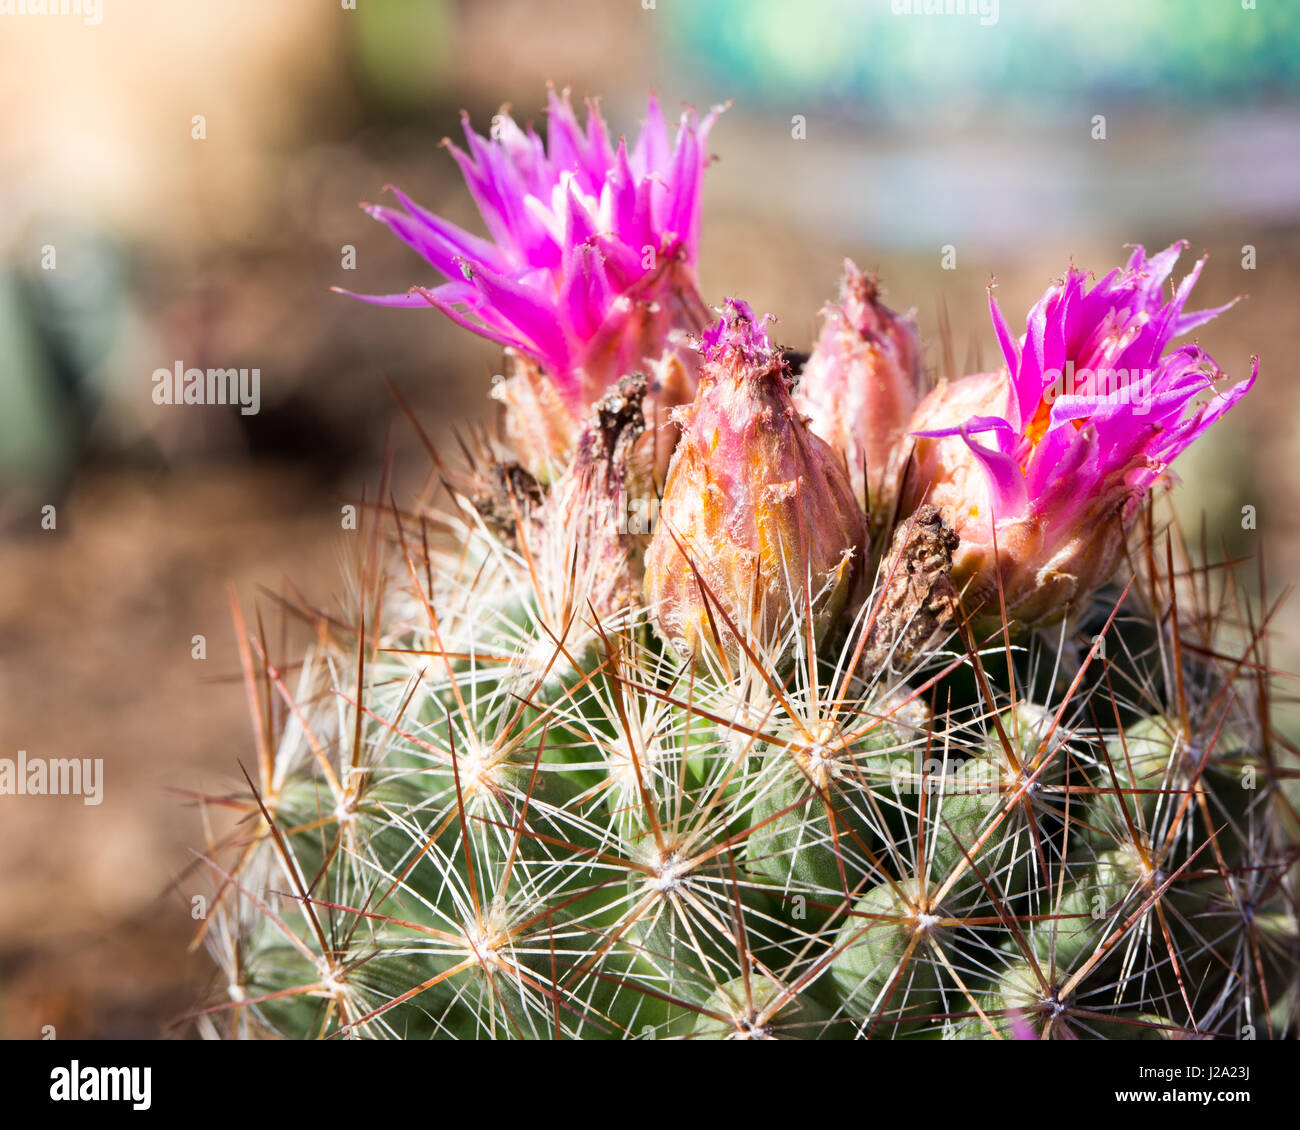 Pincusion cactus (Coryphantha Vivpara) Stock Photo